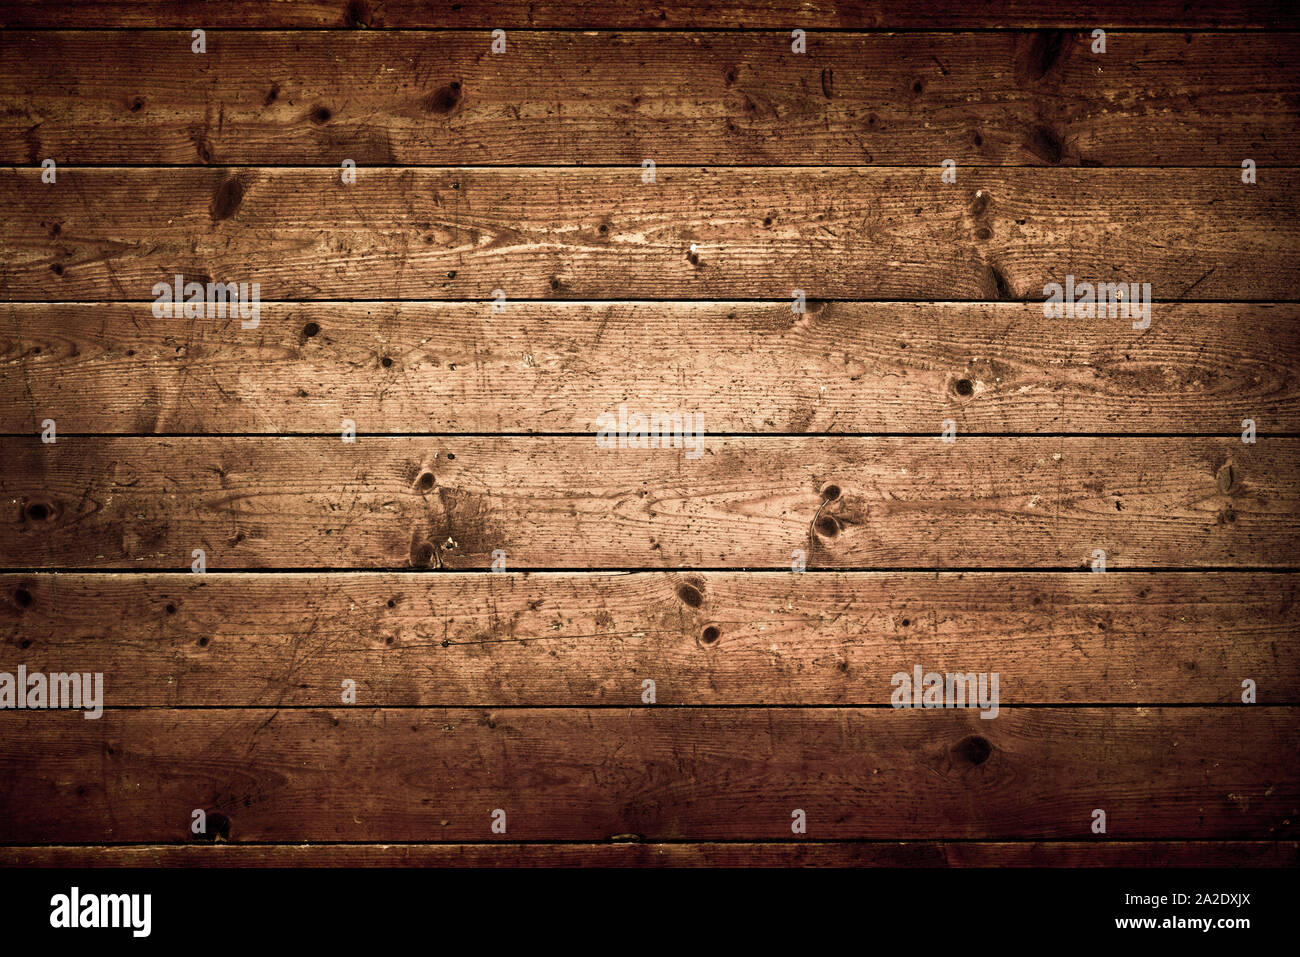 Rustic wood planks background Stock Photo - Alamy